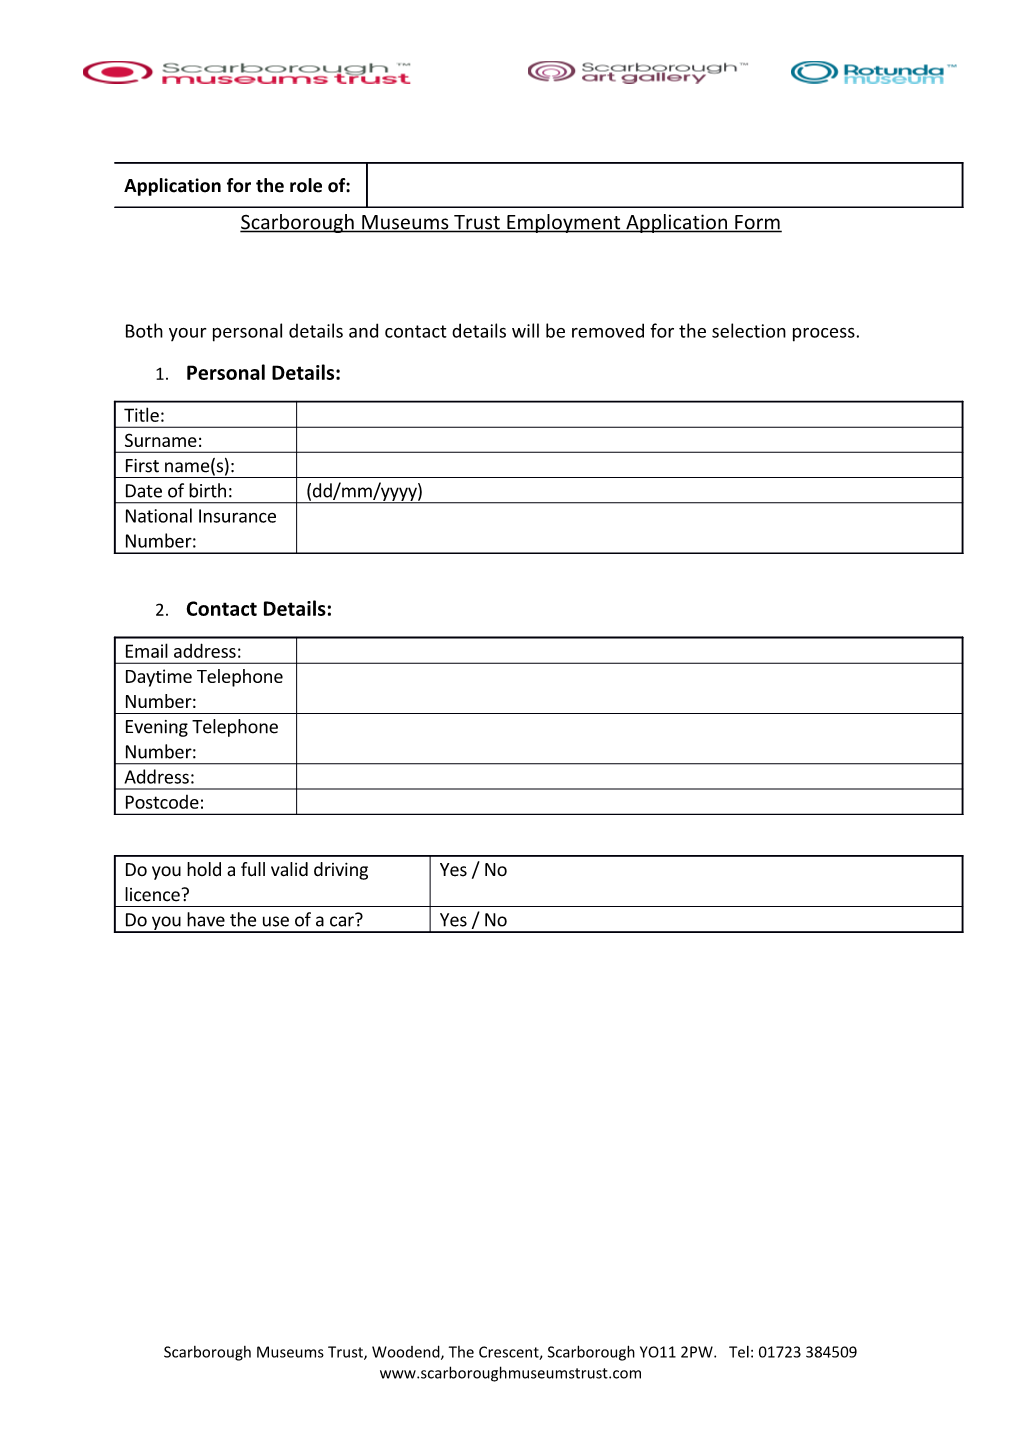 Scarborough Museums Trust Employment Application Form